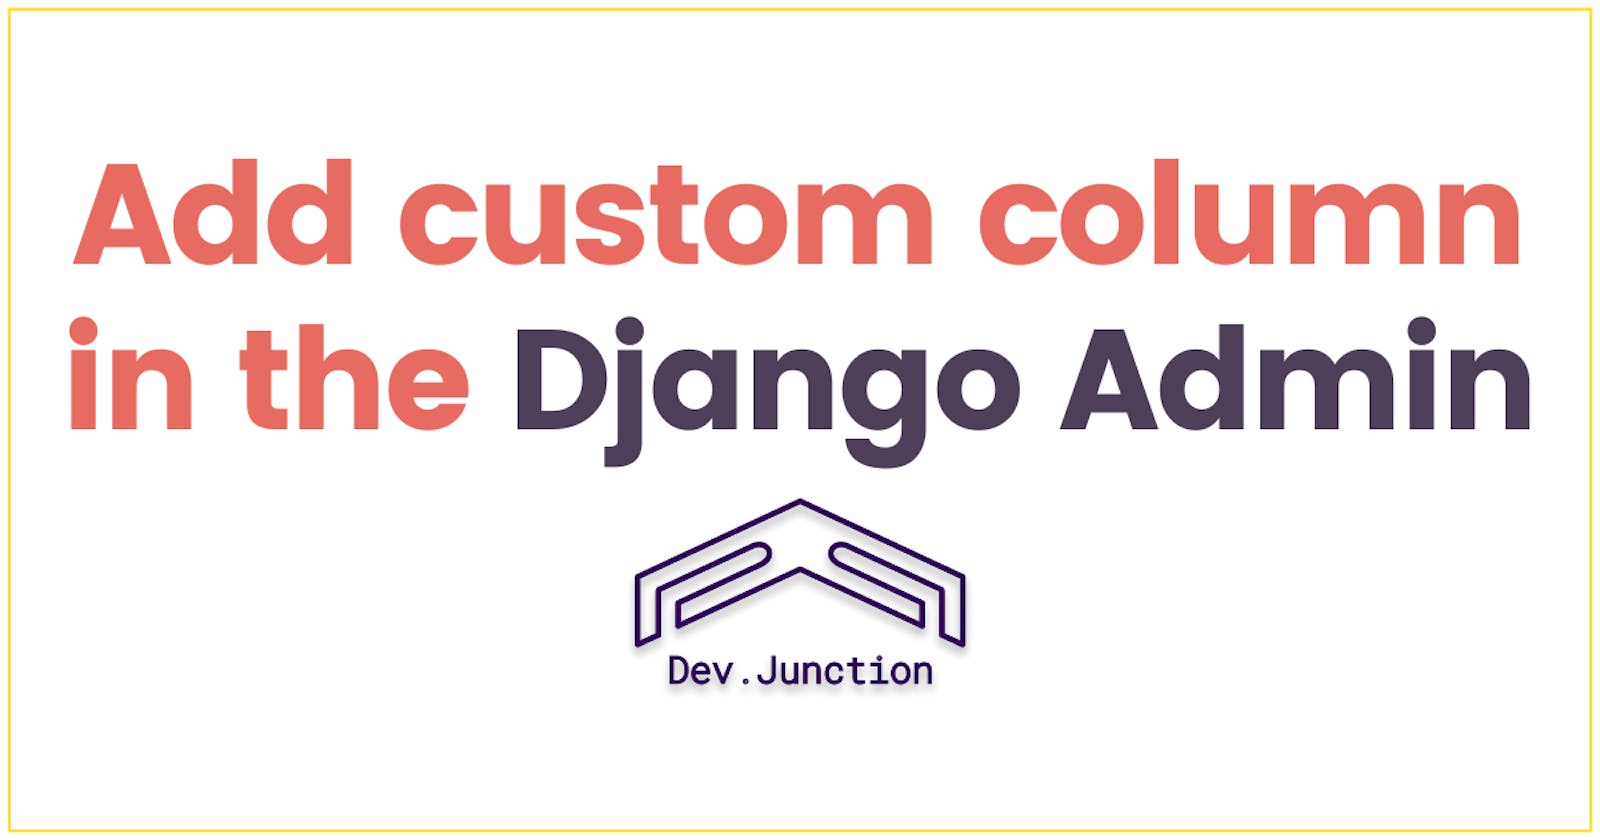 How to add custom column in the Django Admin change list view?